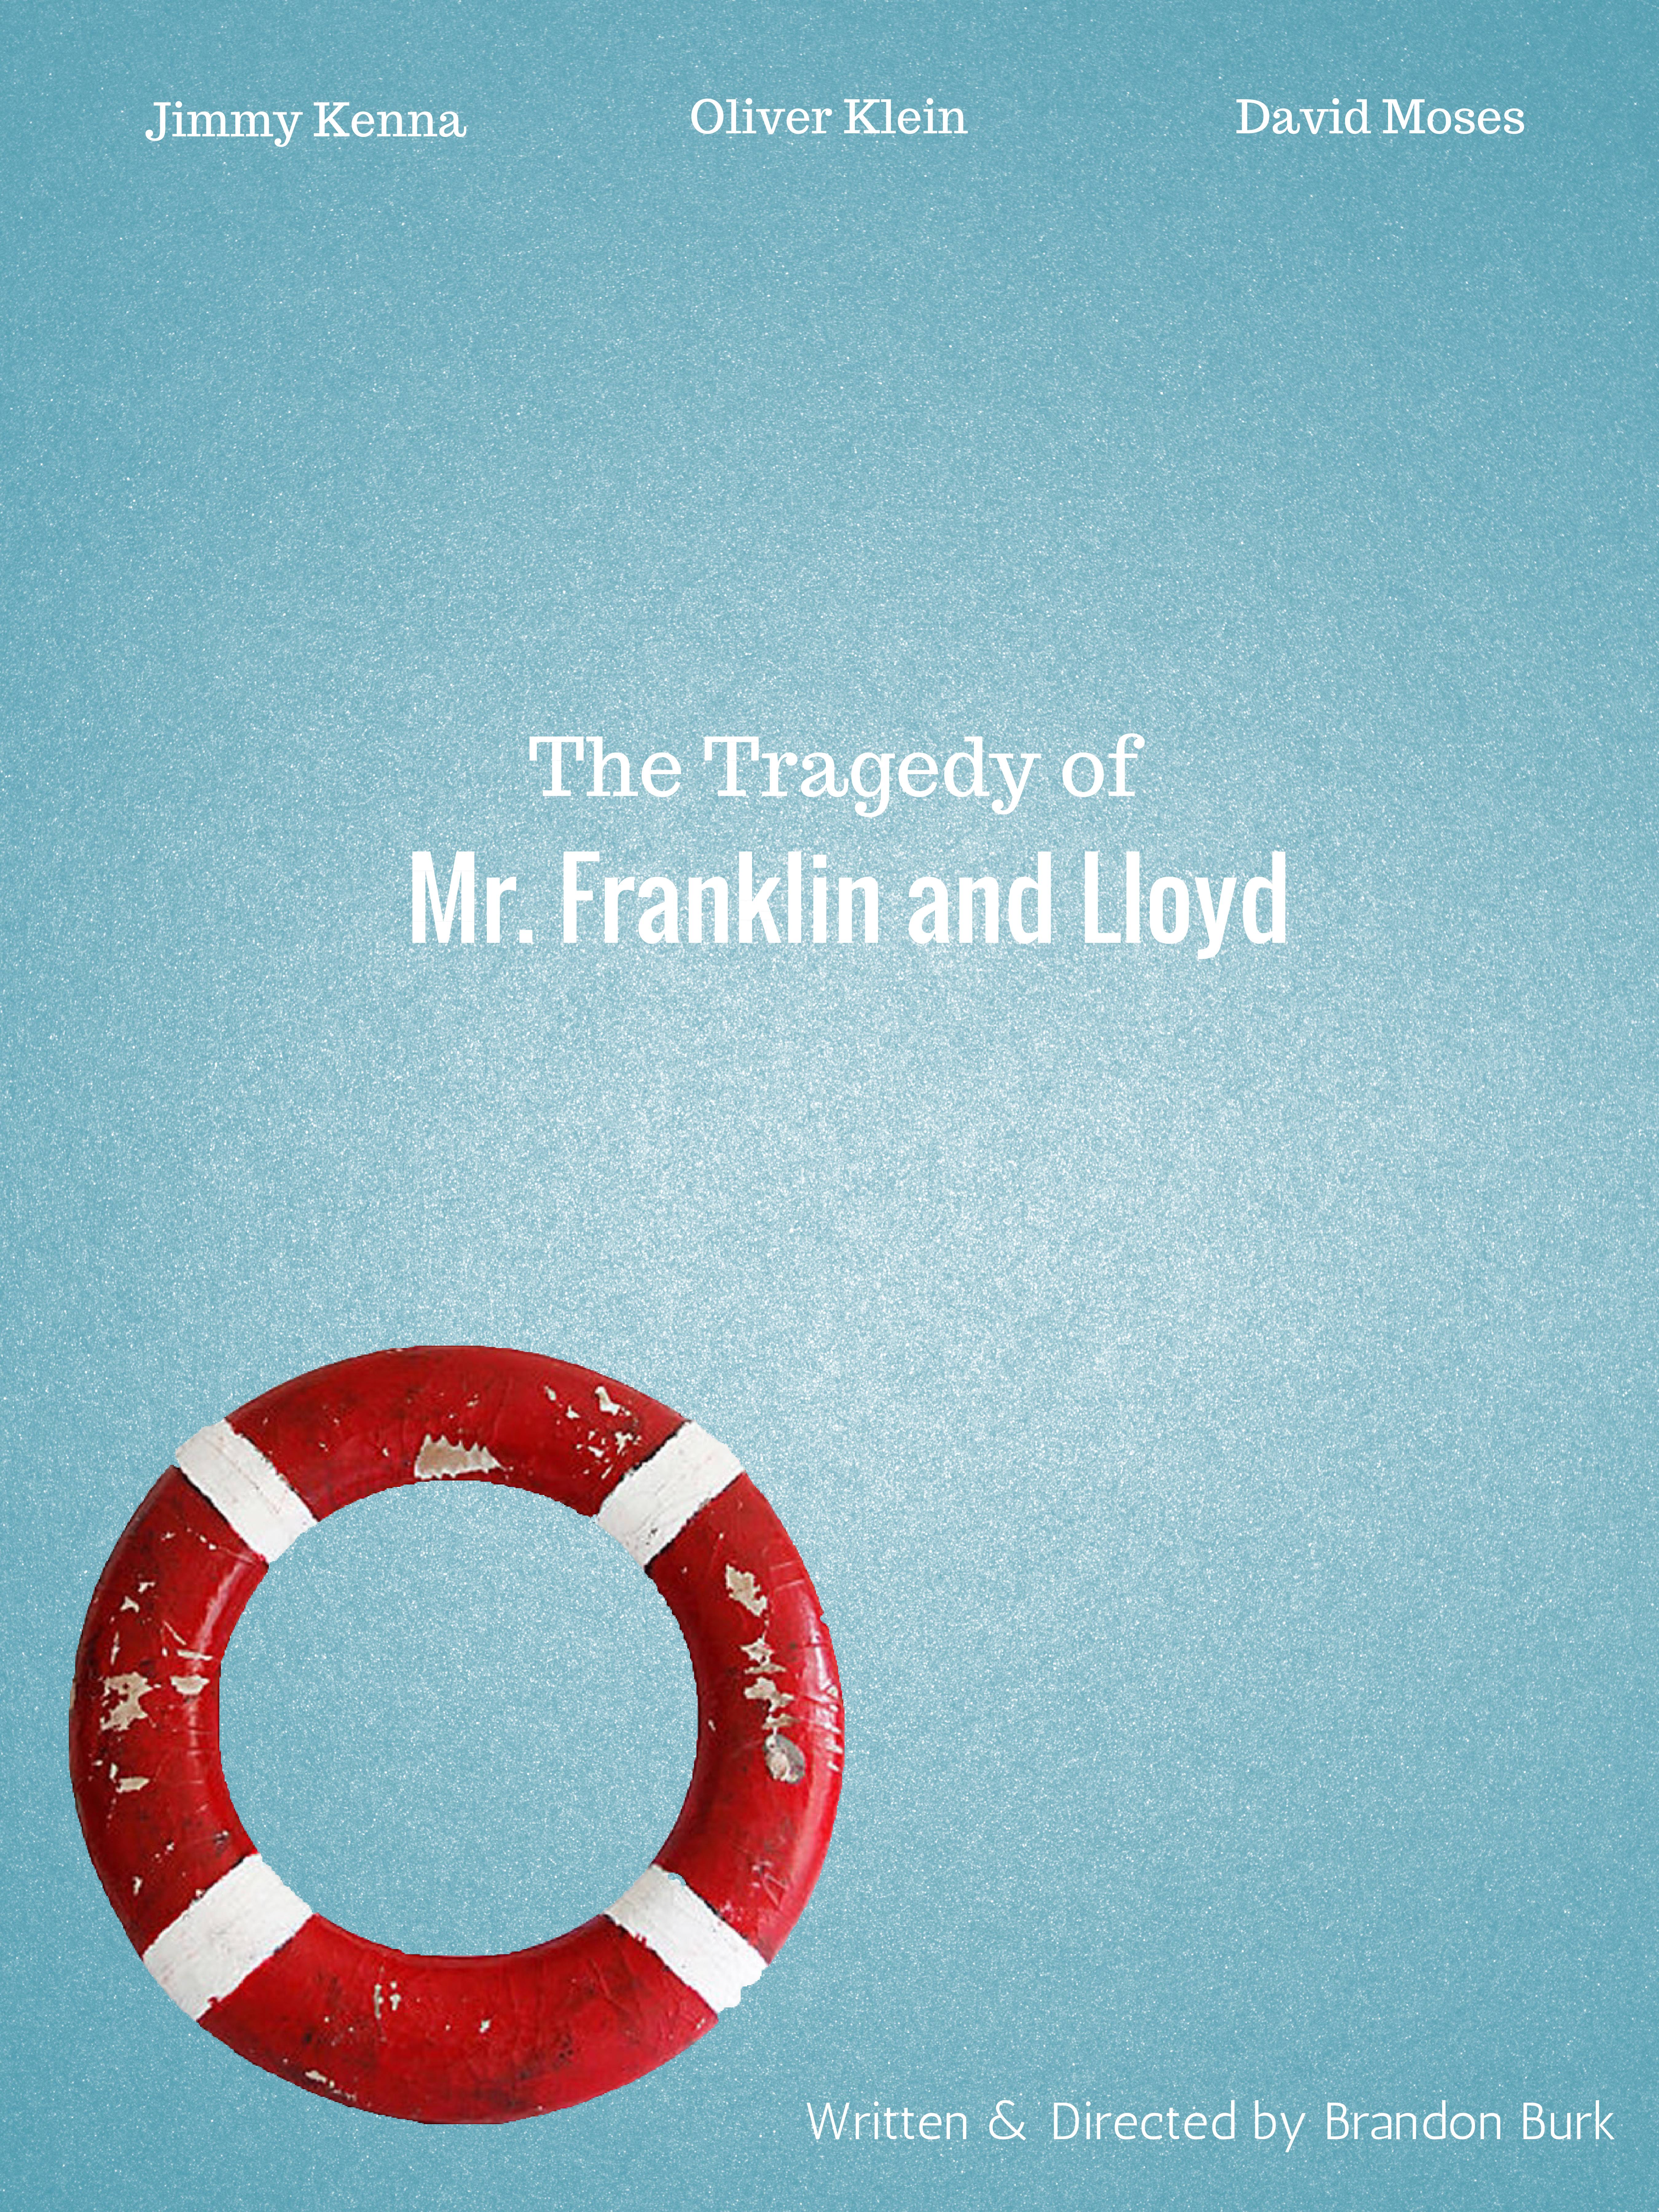 The tragidy of Mr Franklin